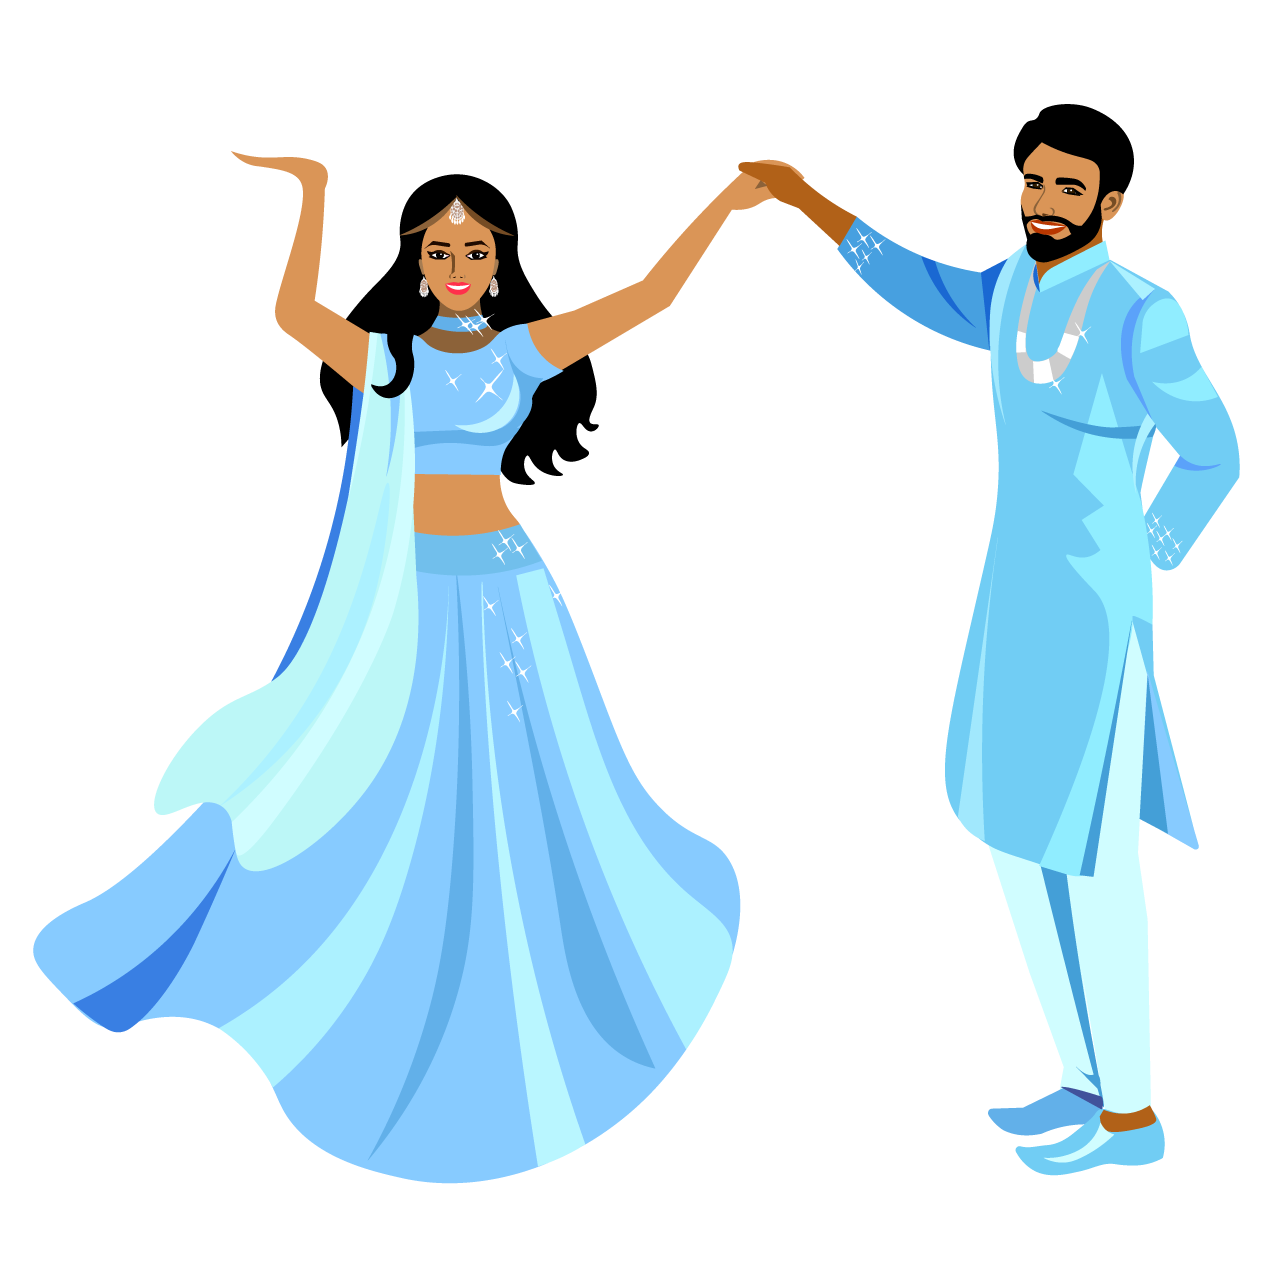 Indian wedding clipart dancing couple celebration cartoon illustration image